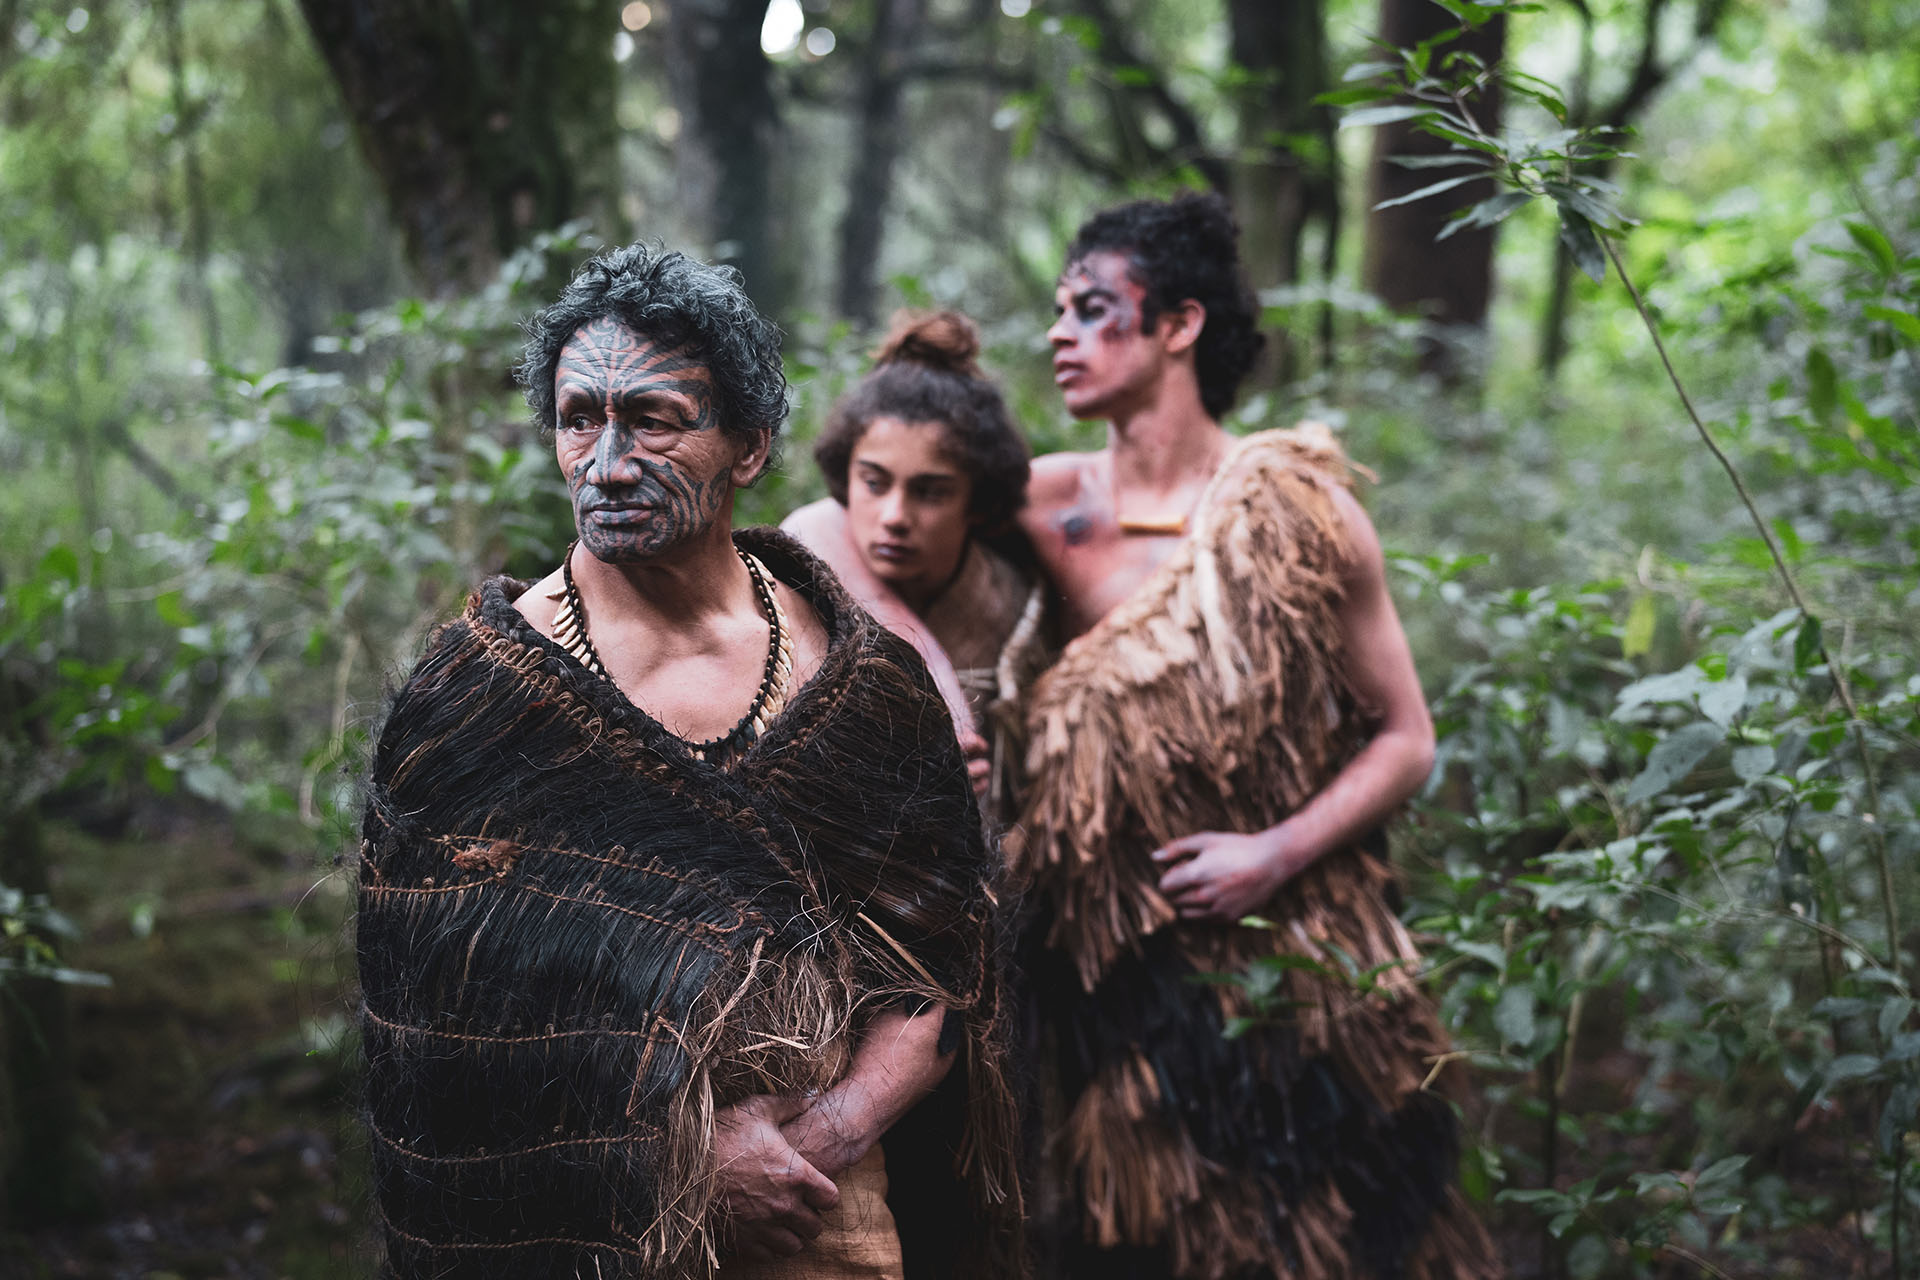 Still from The Untold Tales of Tuteremoana, three Maori male characters walk through the bush